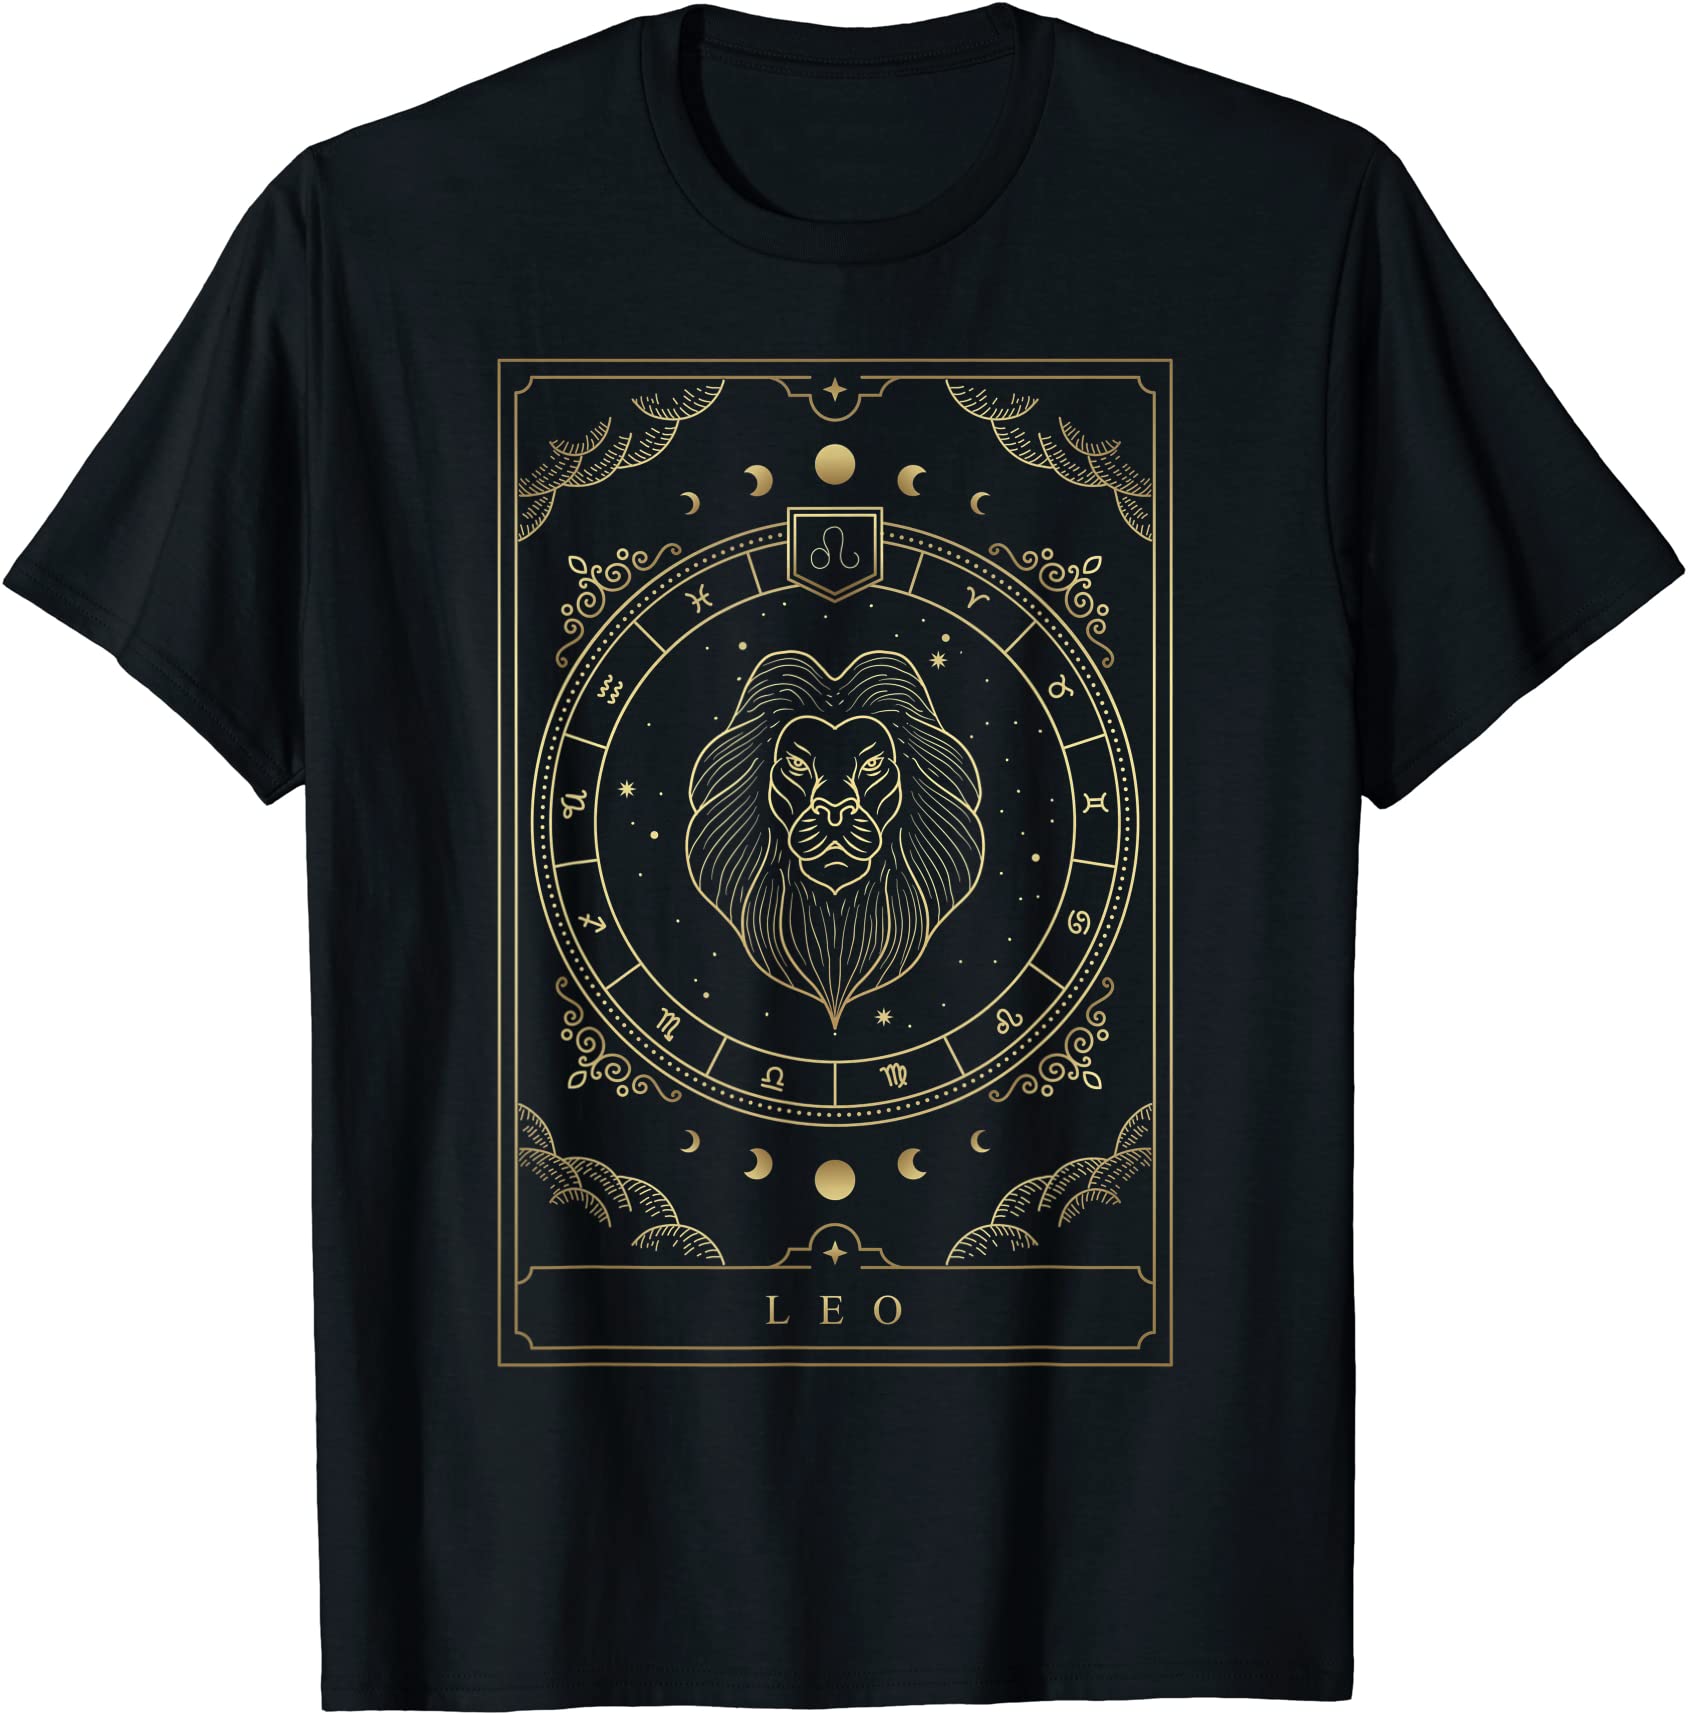 leo horoscope and zodiac constellation symbol t shirt men - Buy t-shirt ...